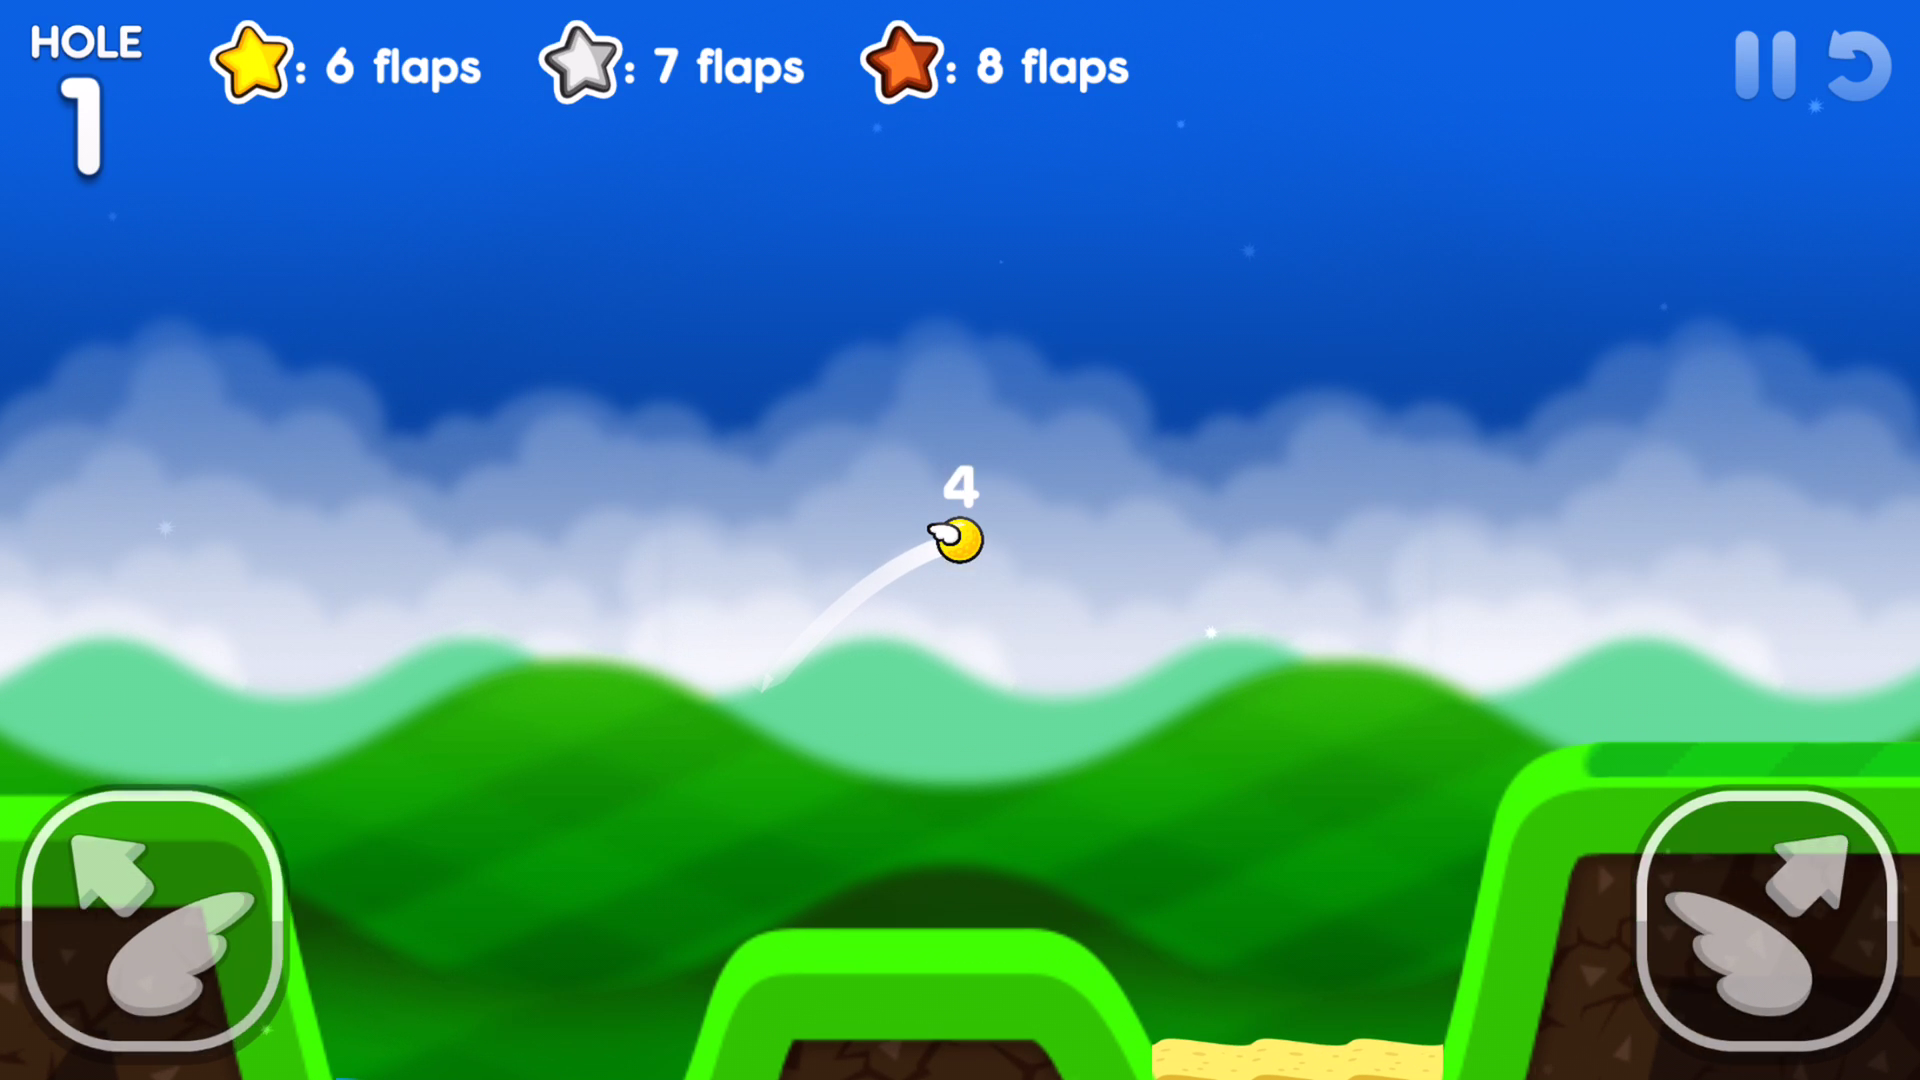 Screenshot 1 of Golf Flappy 2 2.0.8